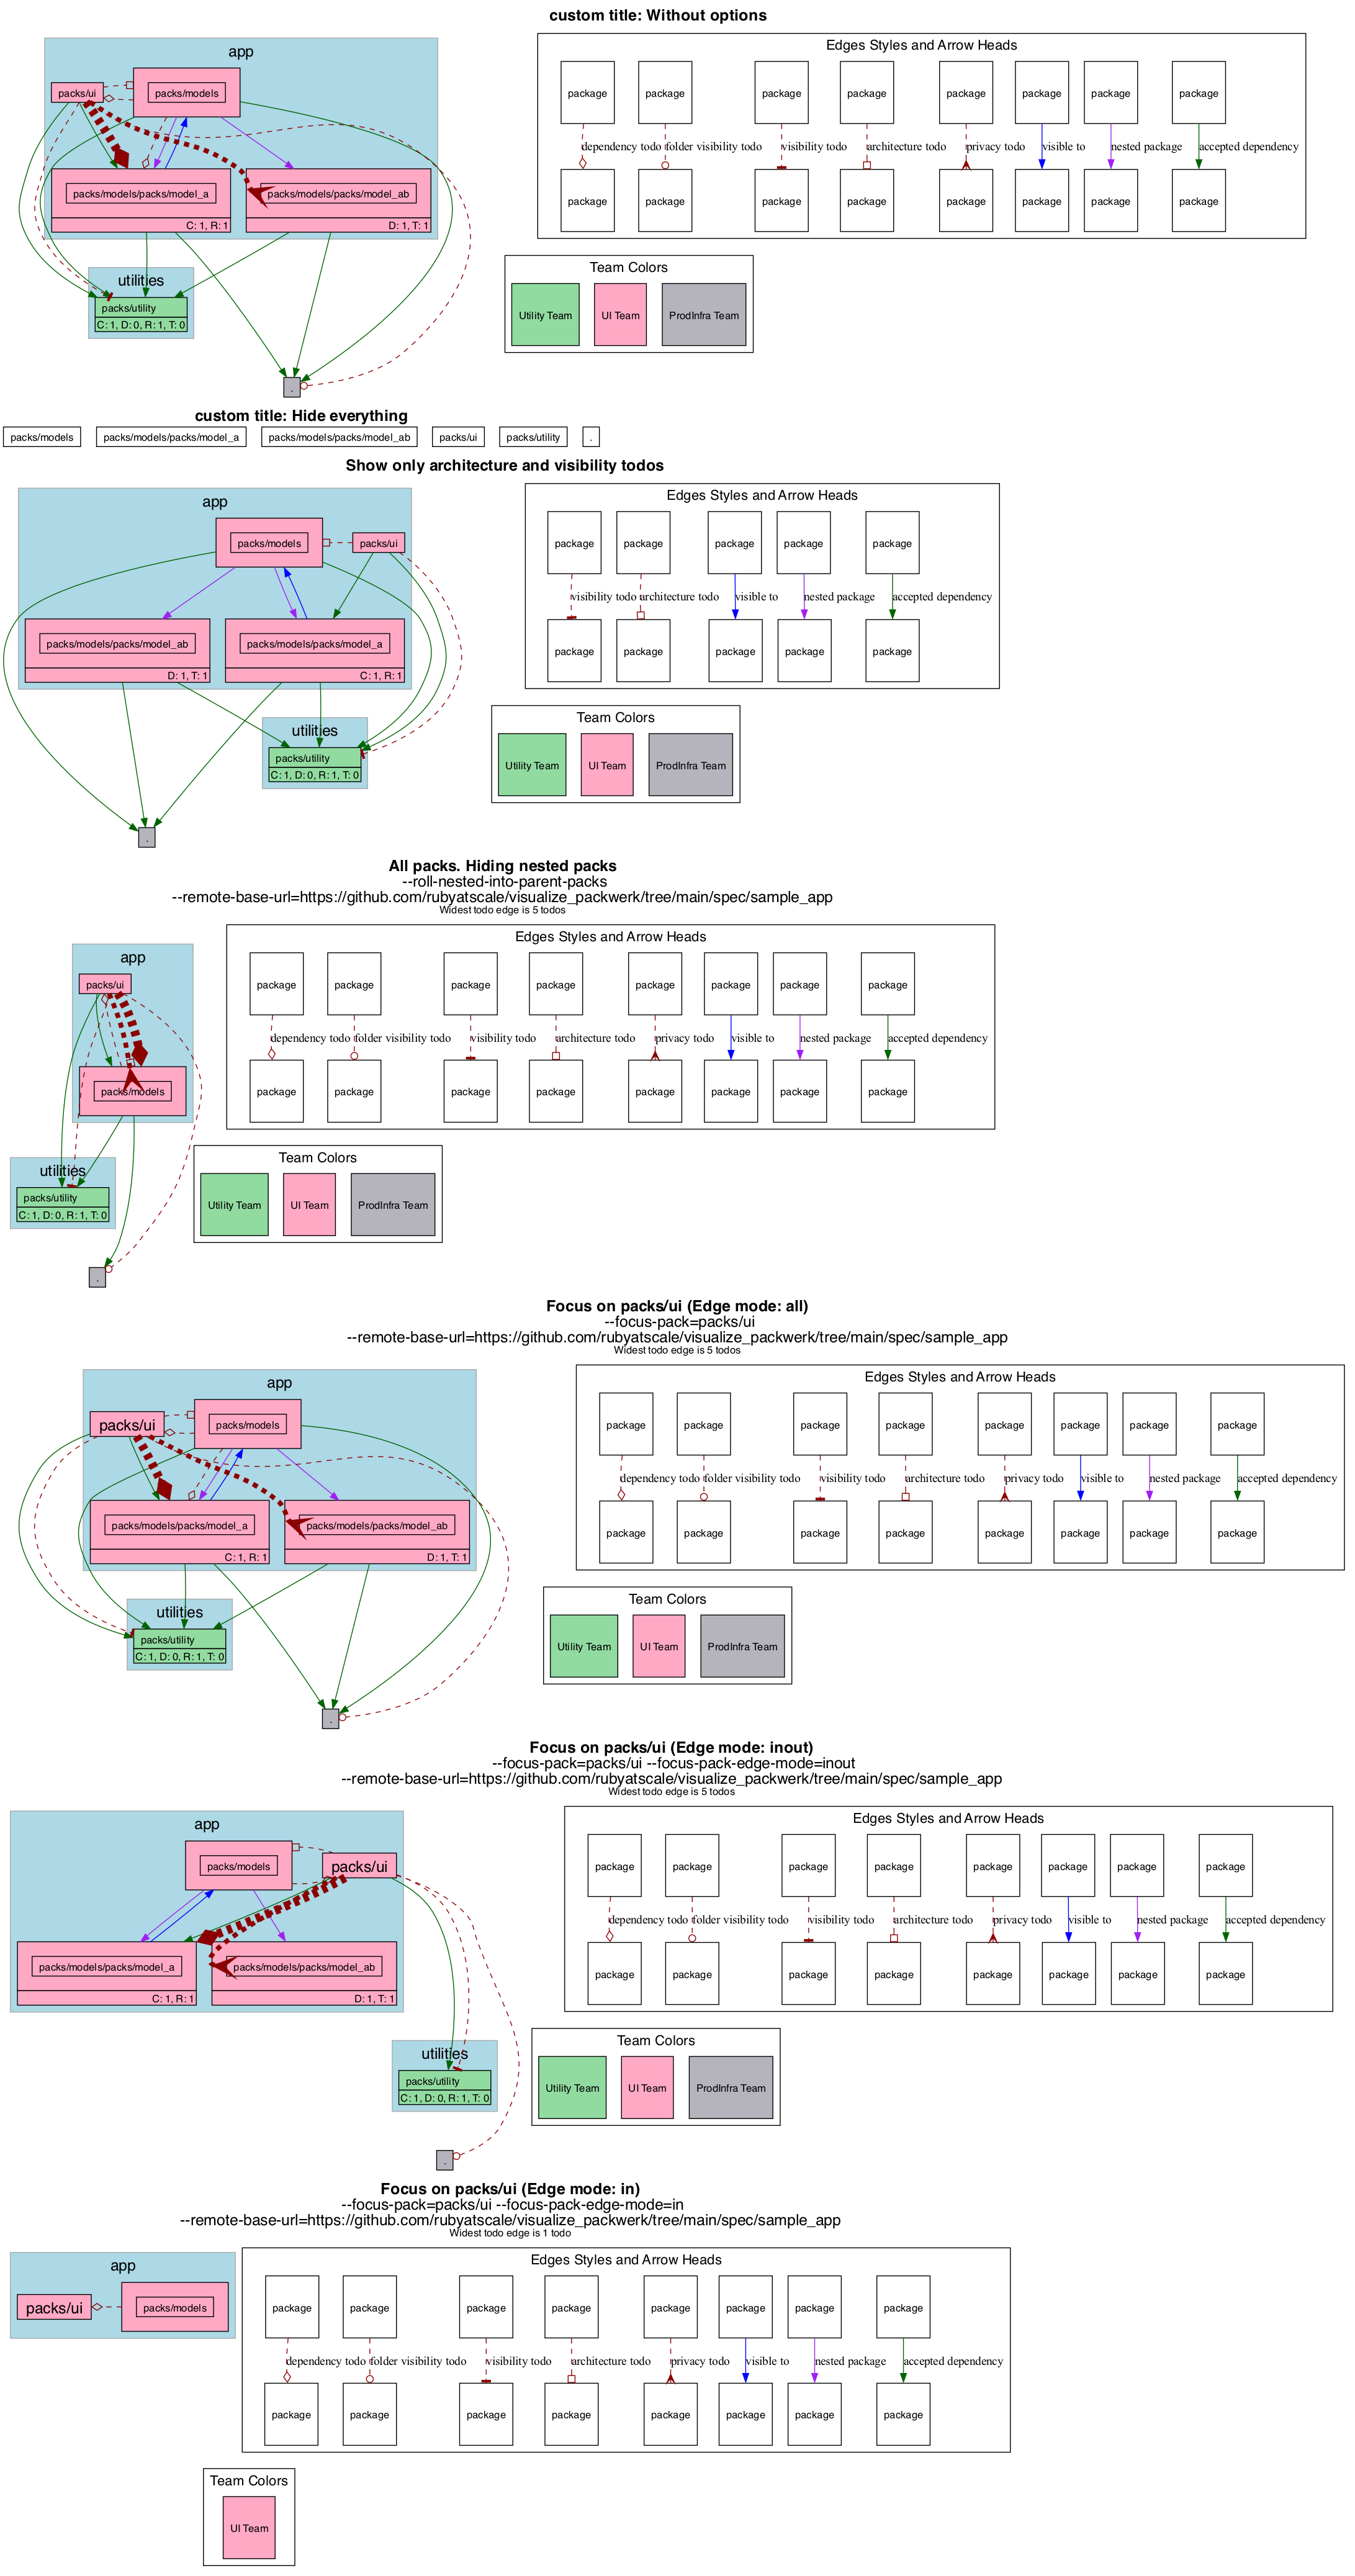 Sample diagrams produced